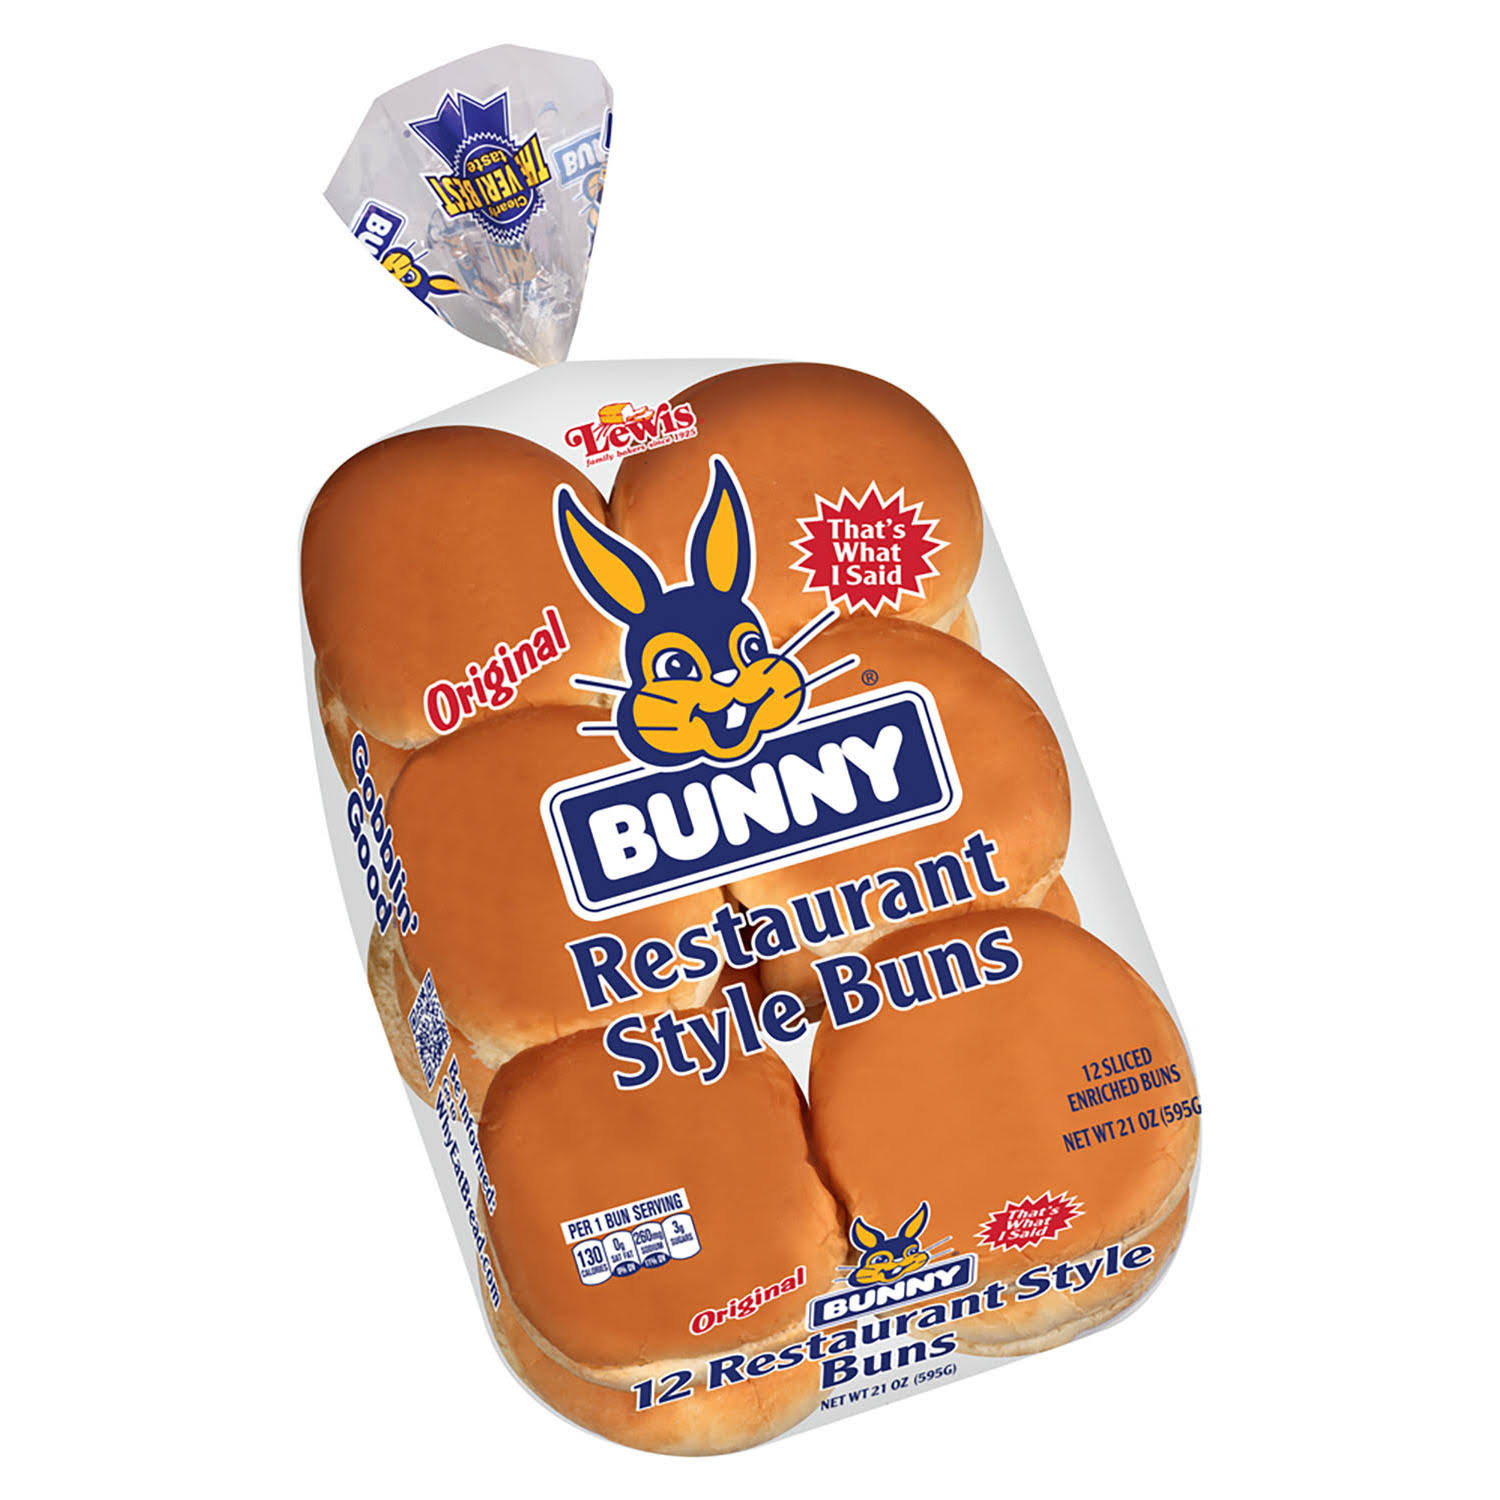 Bunny Restaurant Style Buns - 21oz, 12ct